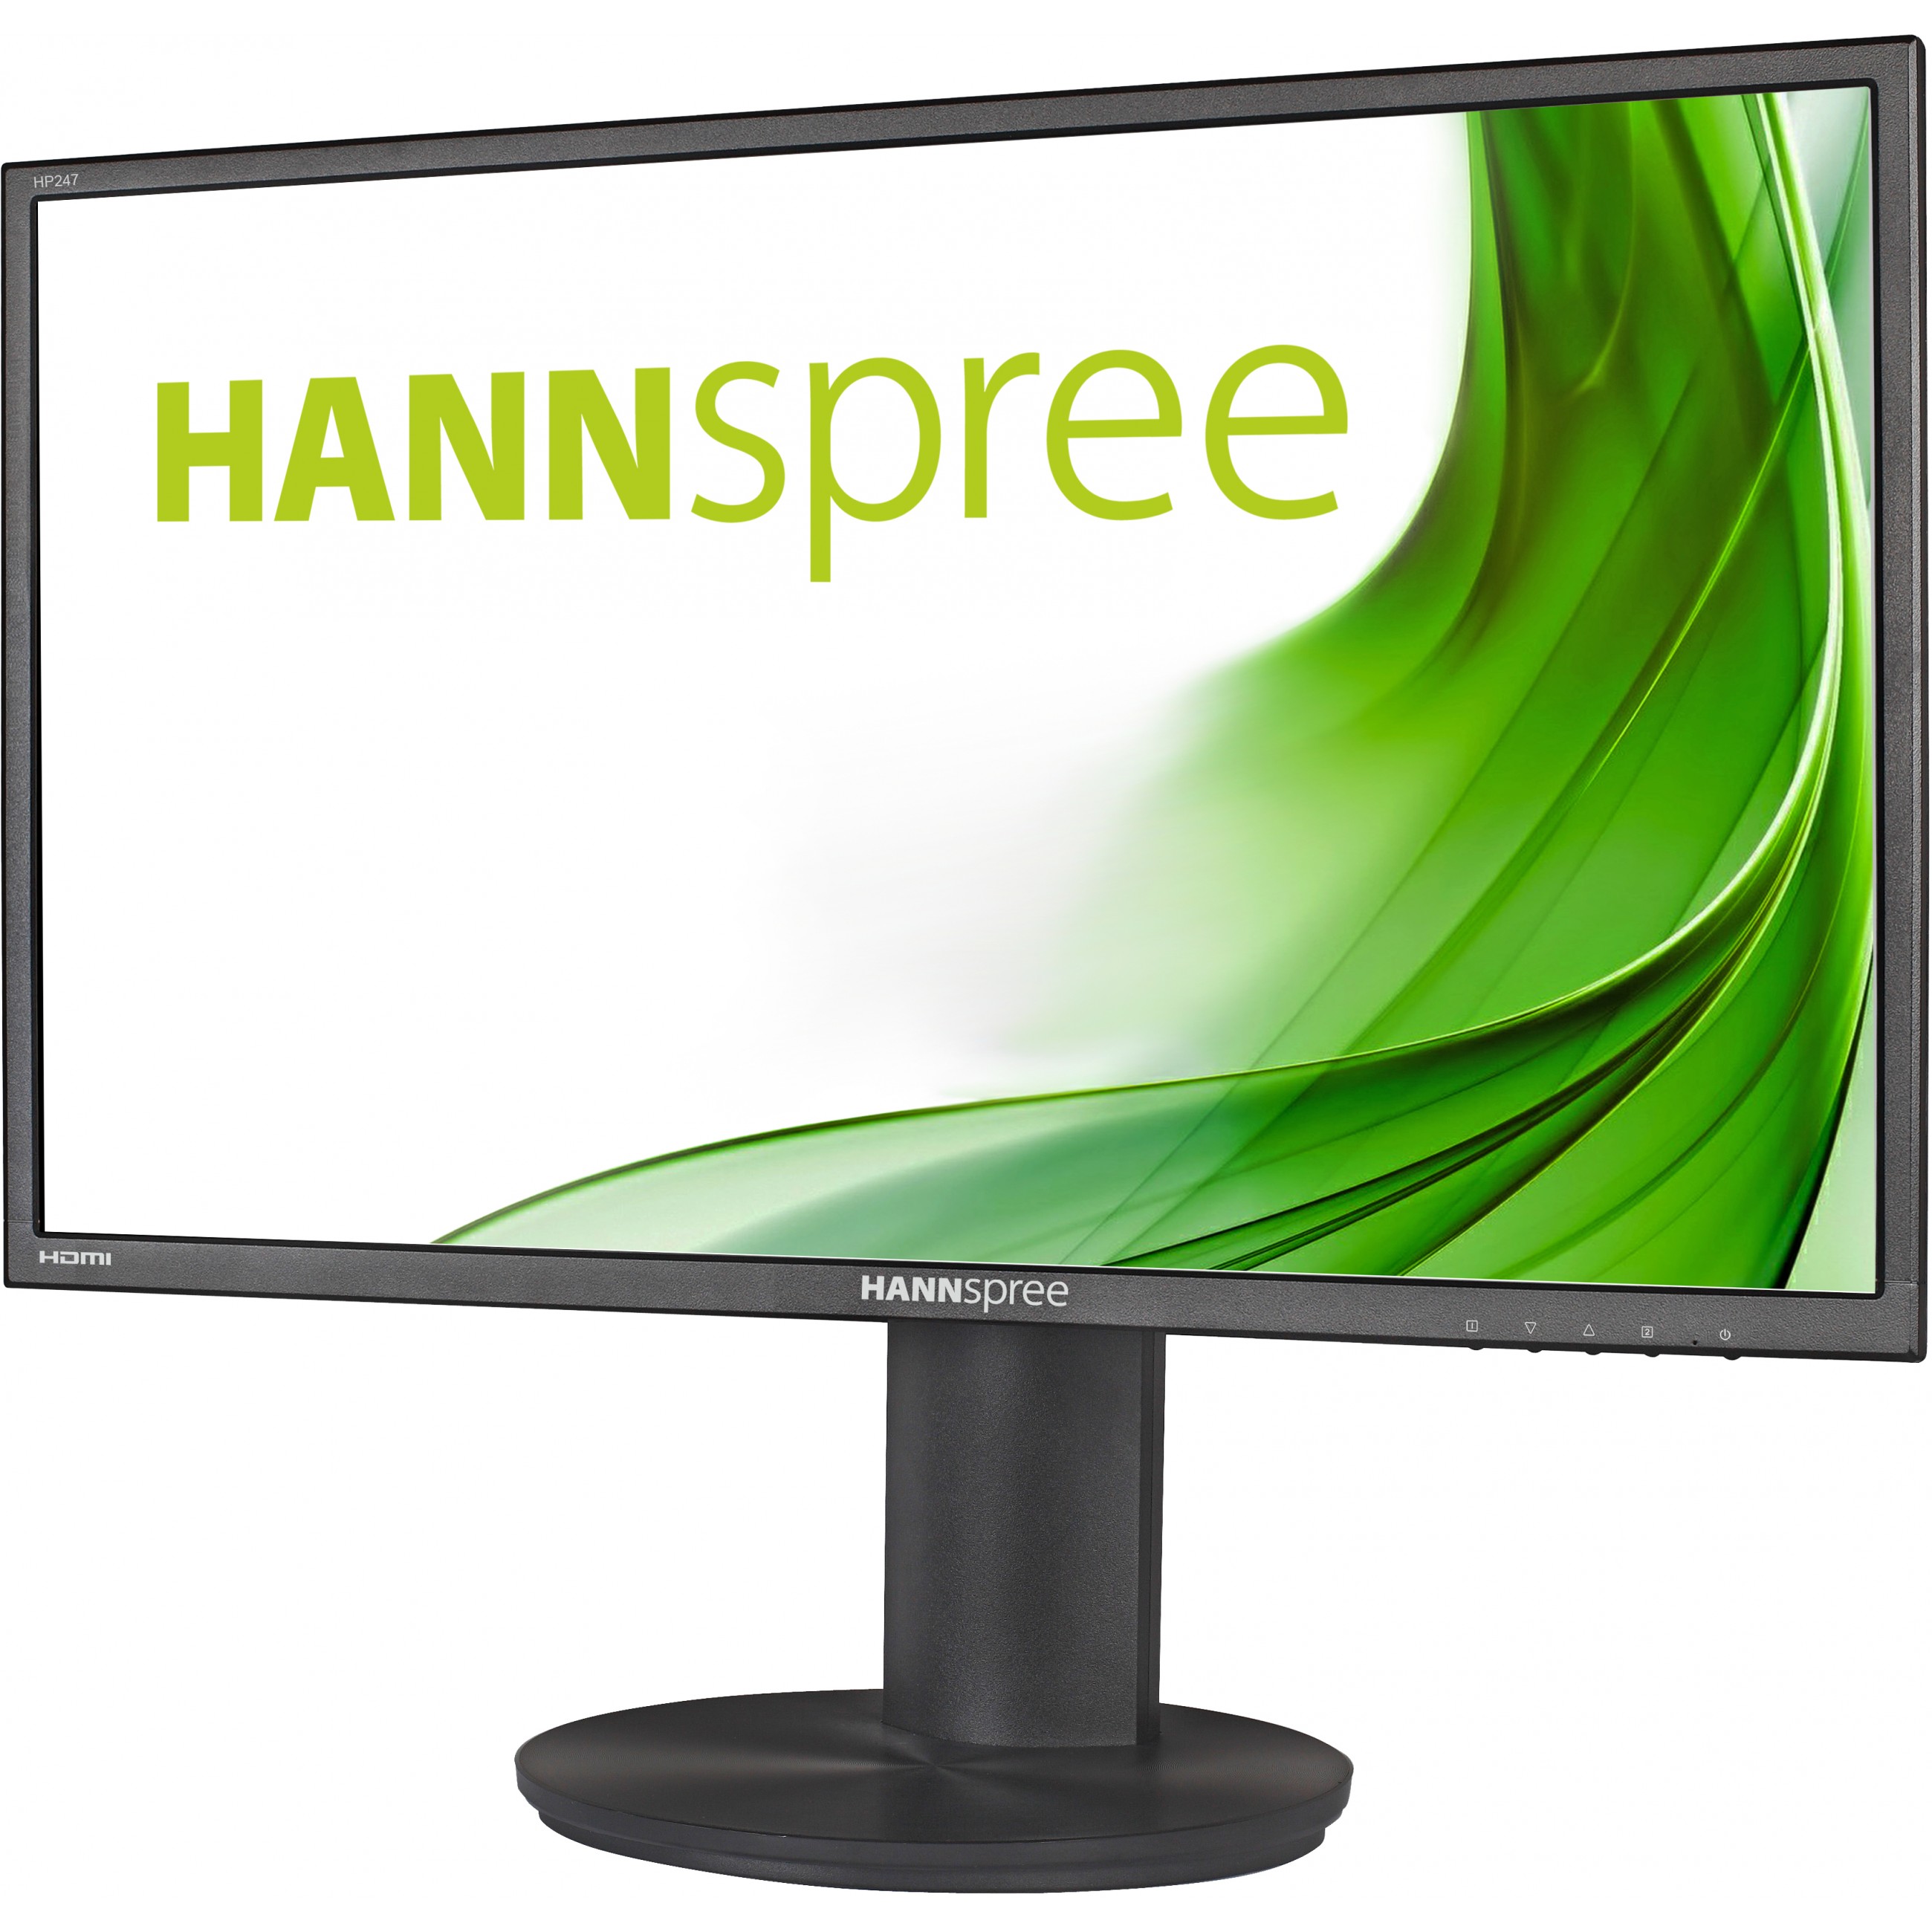 Hannspree HP247HJV, 59,9 cm (23.6 Zoll), 1920 x 1080 Pixel, Full HD, LED, 8 ms, Schwarz